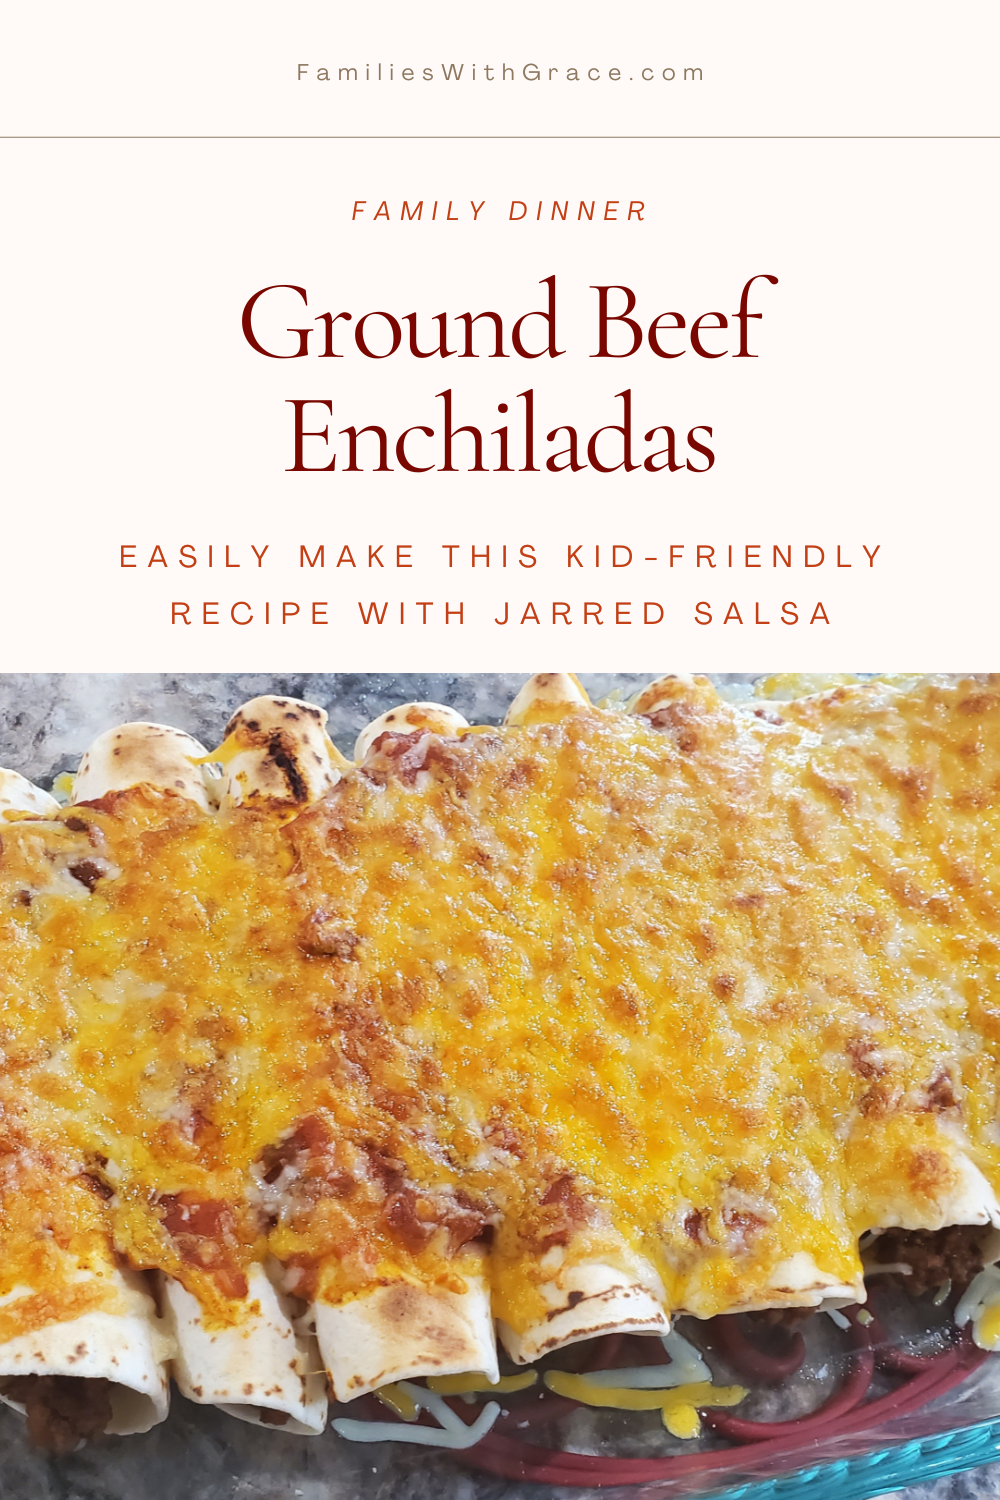 Beef enchiladas with salsa recipe